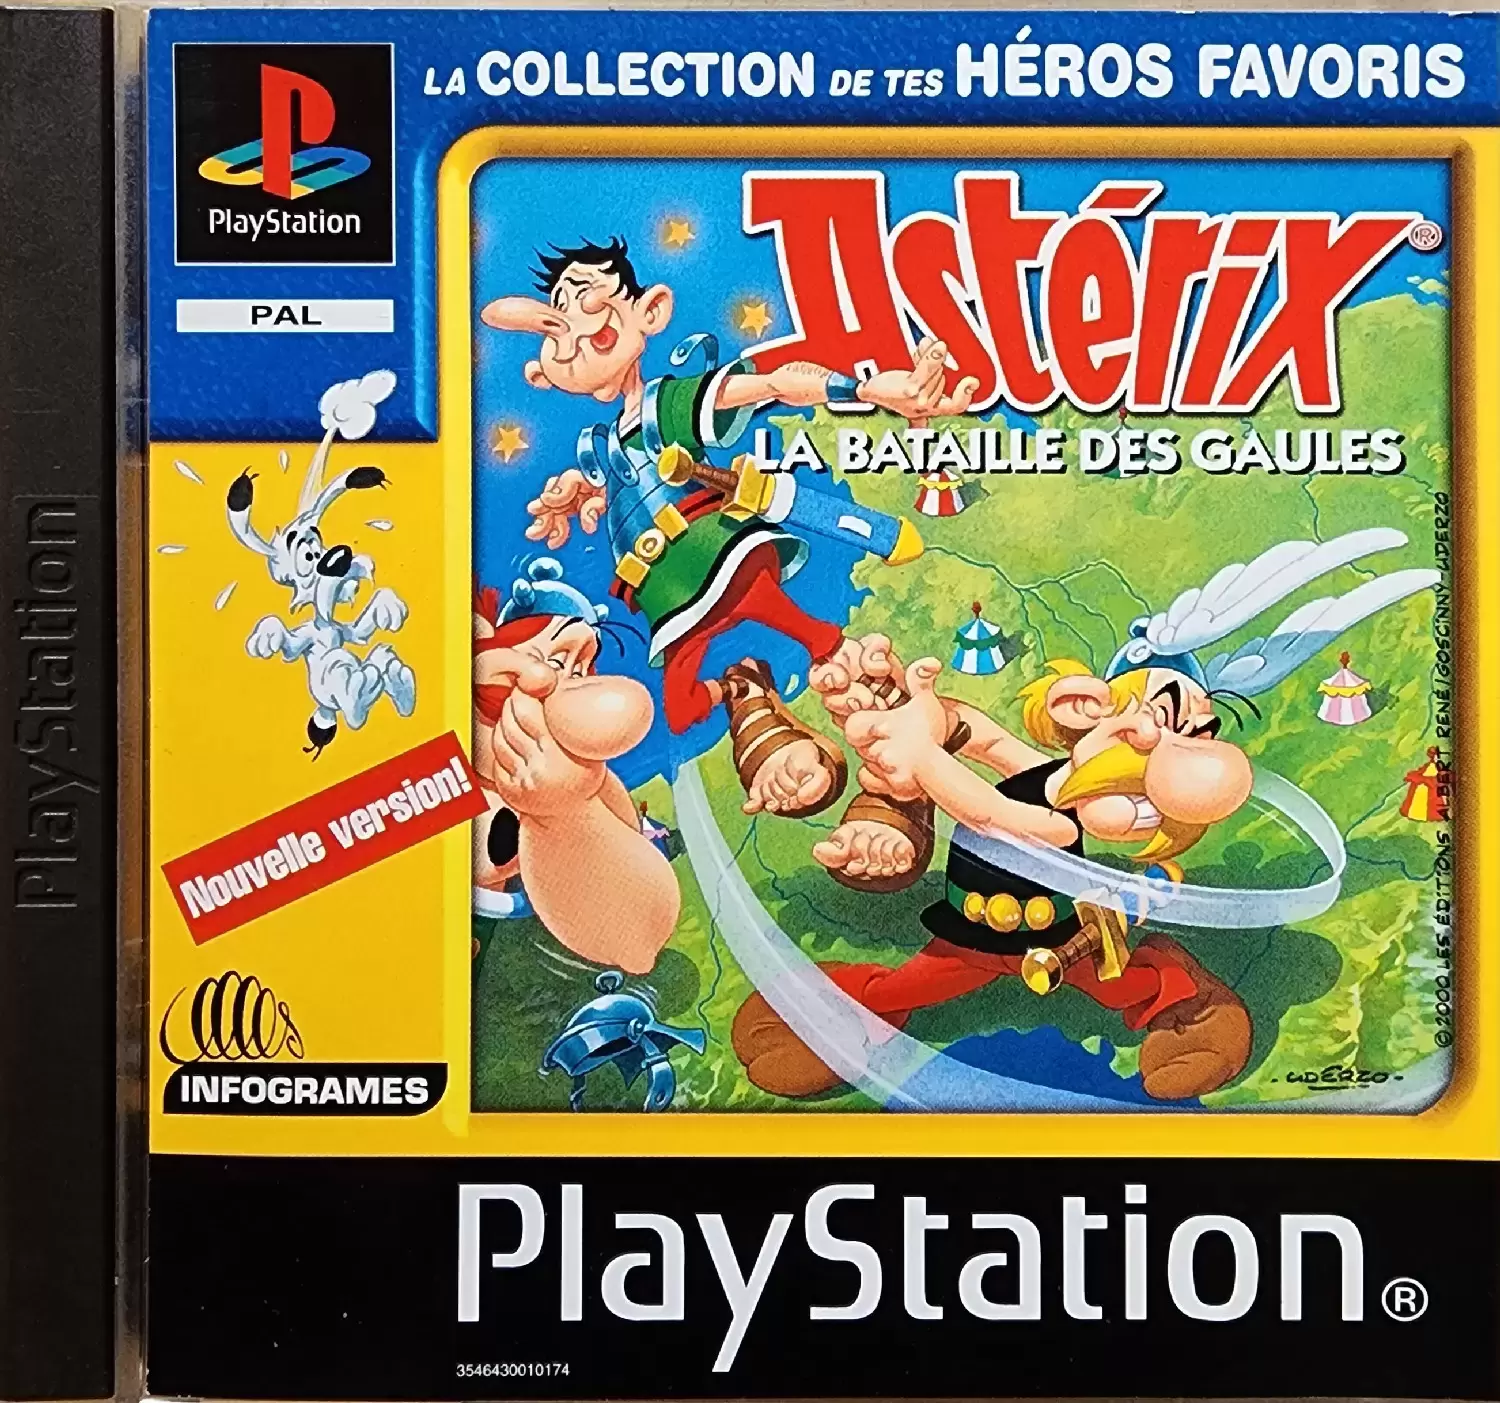 Playstation games - Asterix : La bataille des Gaules